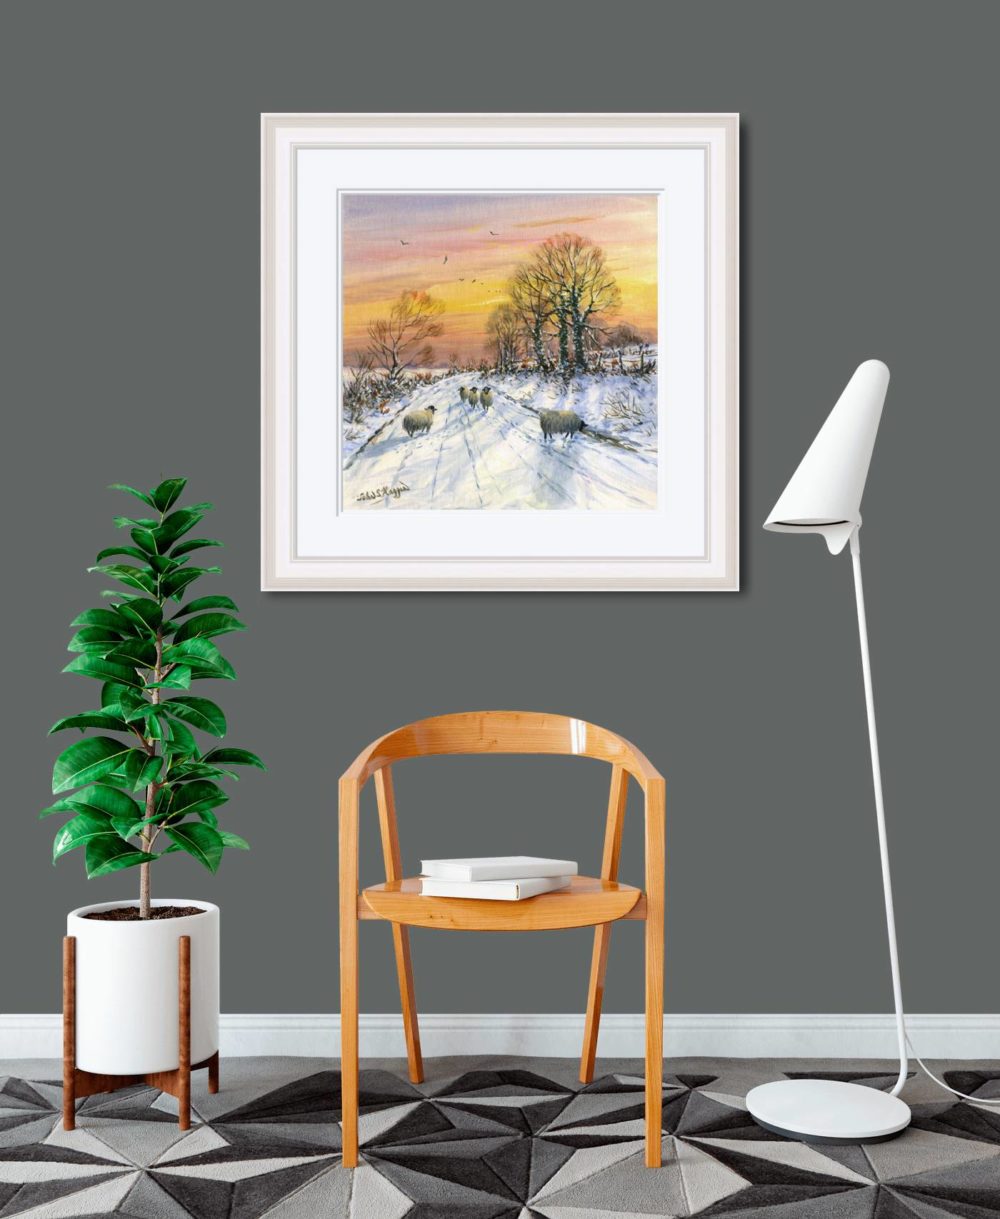 Warm Winter Sky Print (Large) In White Frame In Room